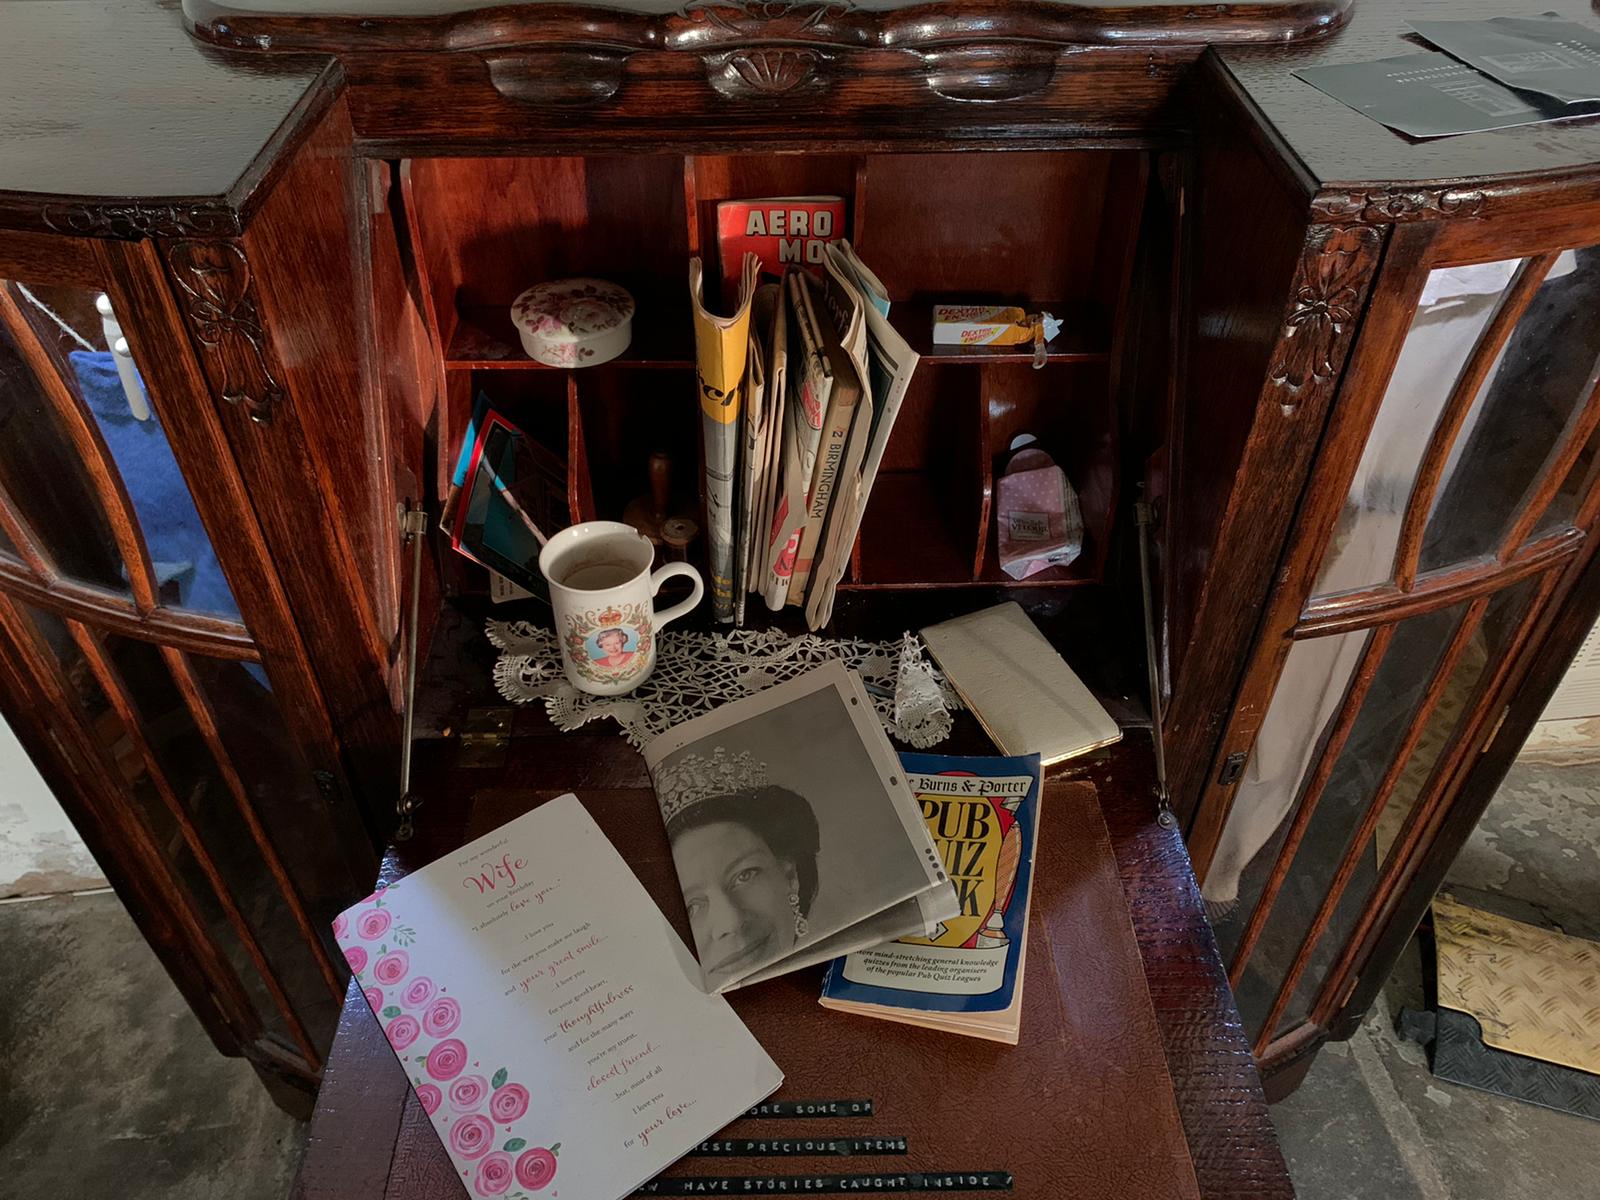 open bureau with newspapers, books and a mug on it